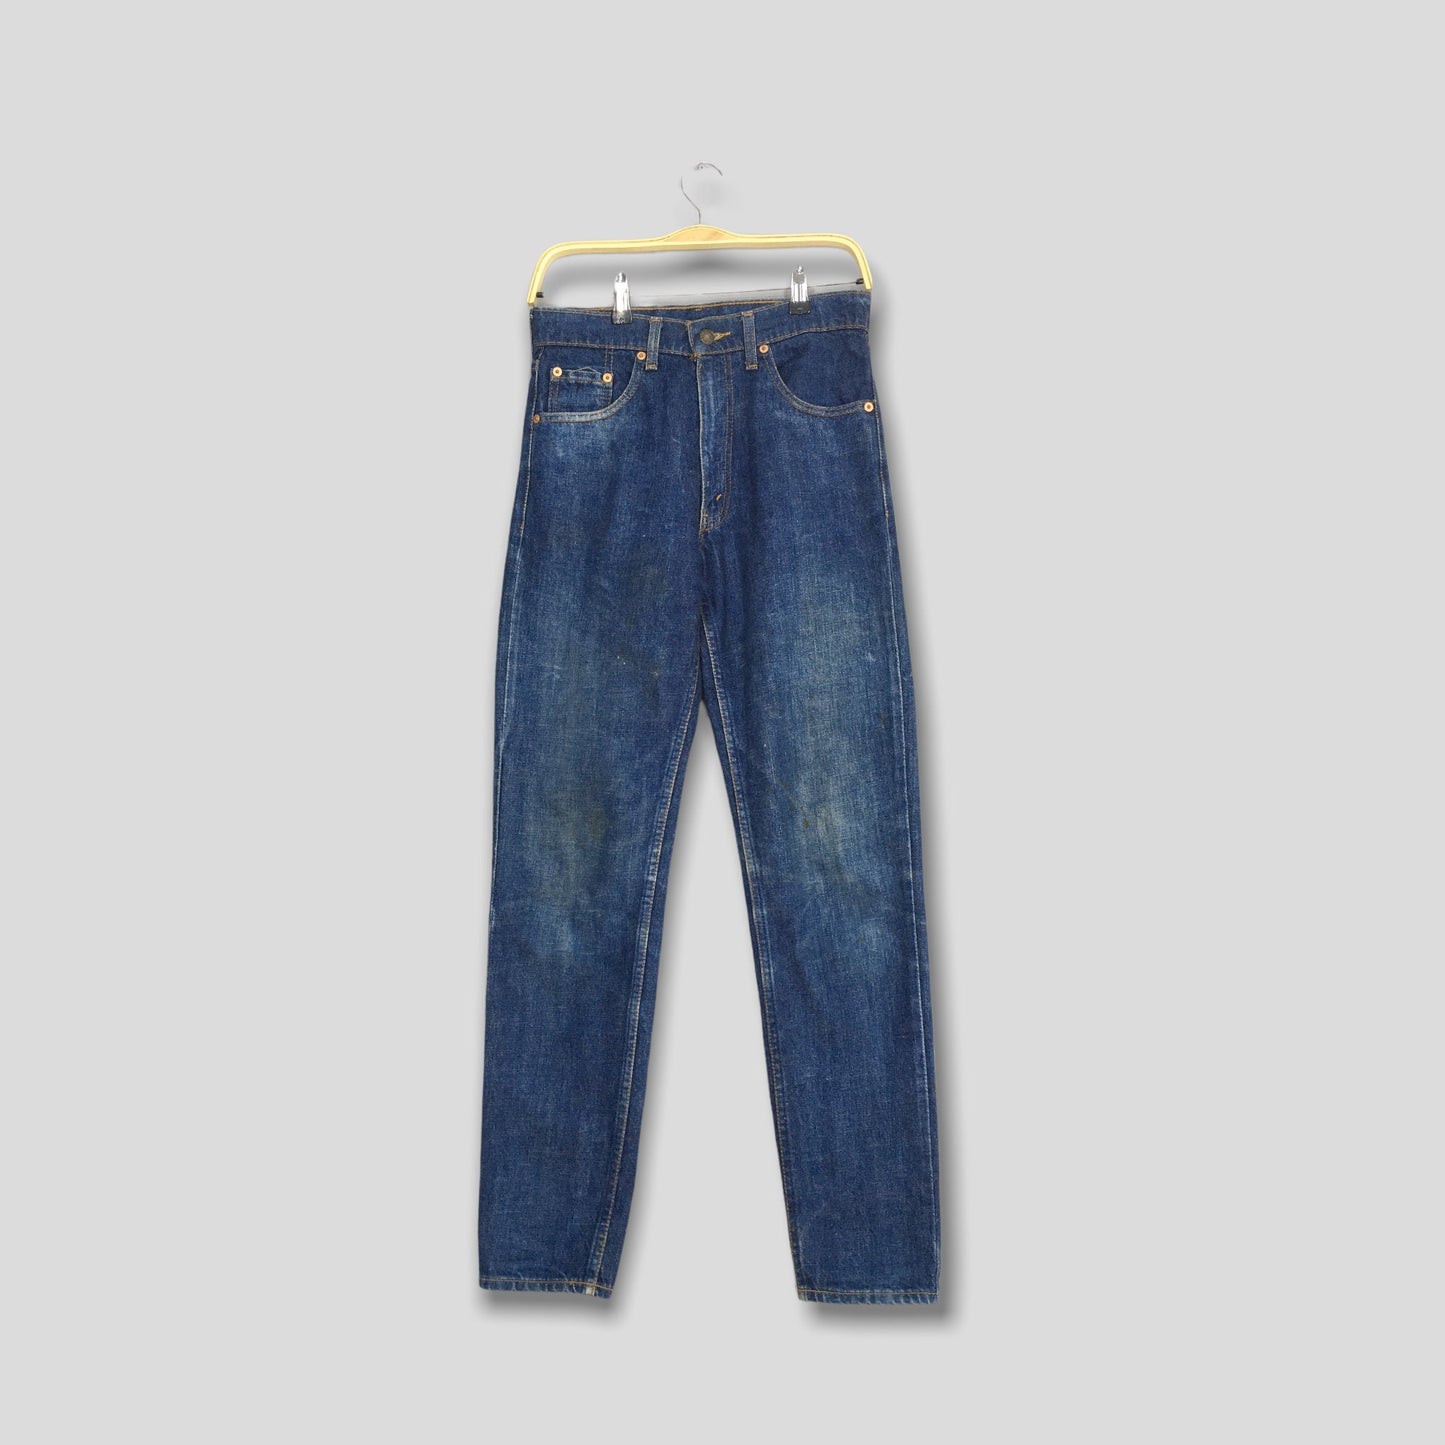 Levi's 603 Jeans Skinny Fit Denim Size 28x32